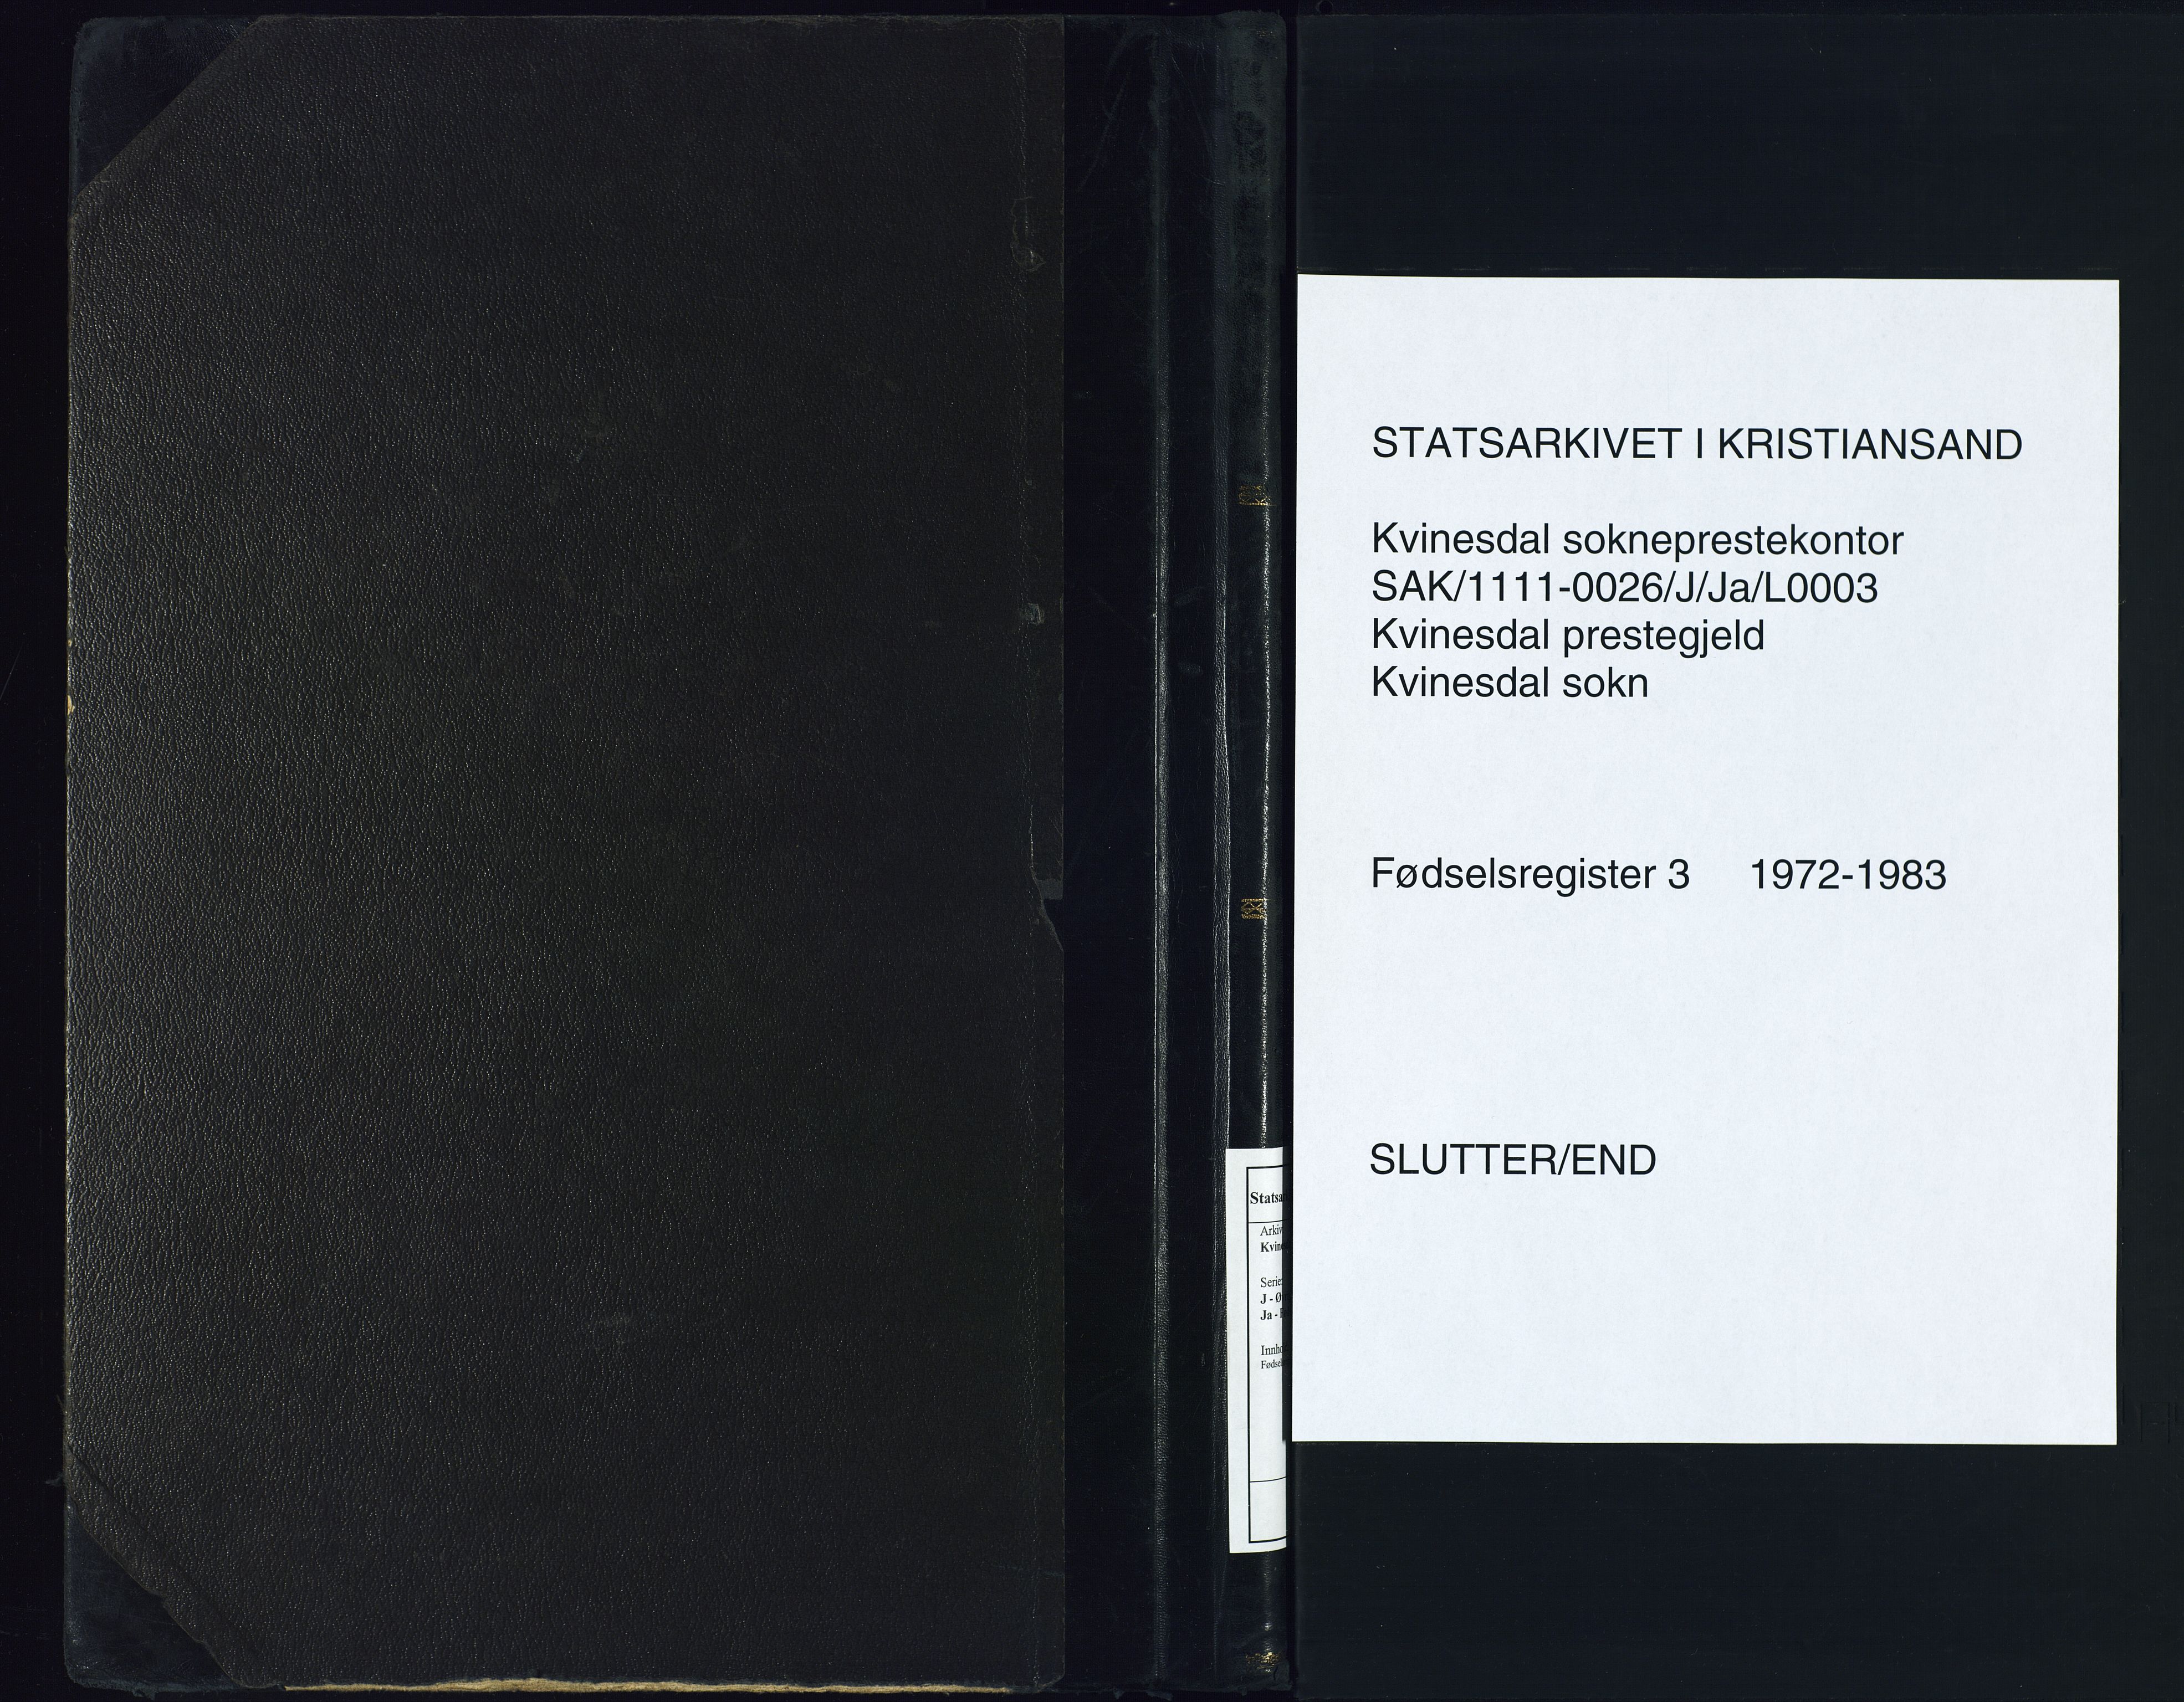 Kvinesdal sokneprestkontor, SAK/1111-0026/J/Ja/L0003: Birth register no. 3, 1972-1983